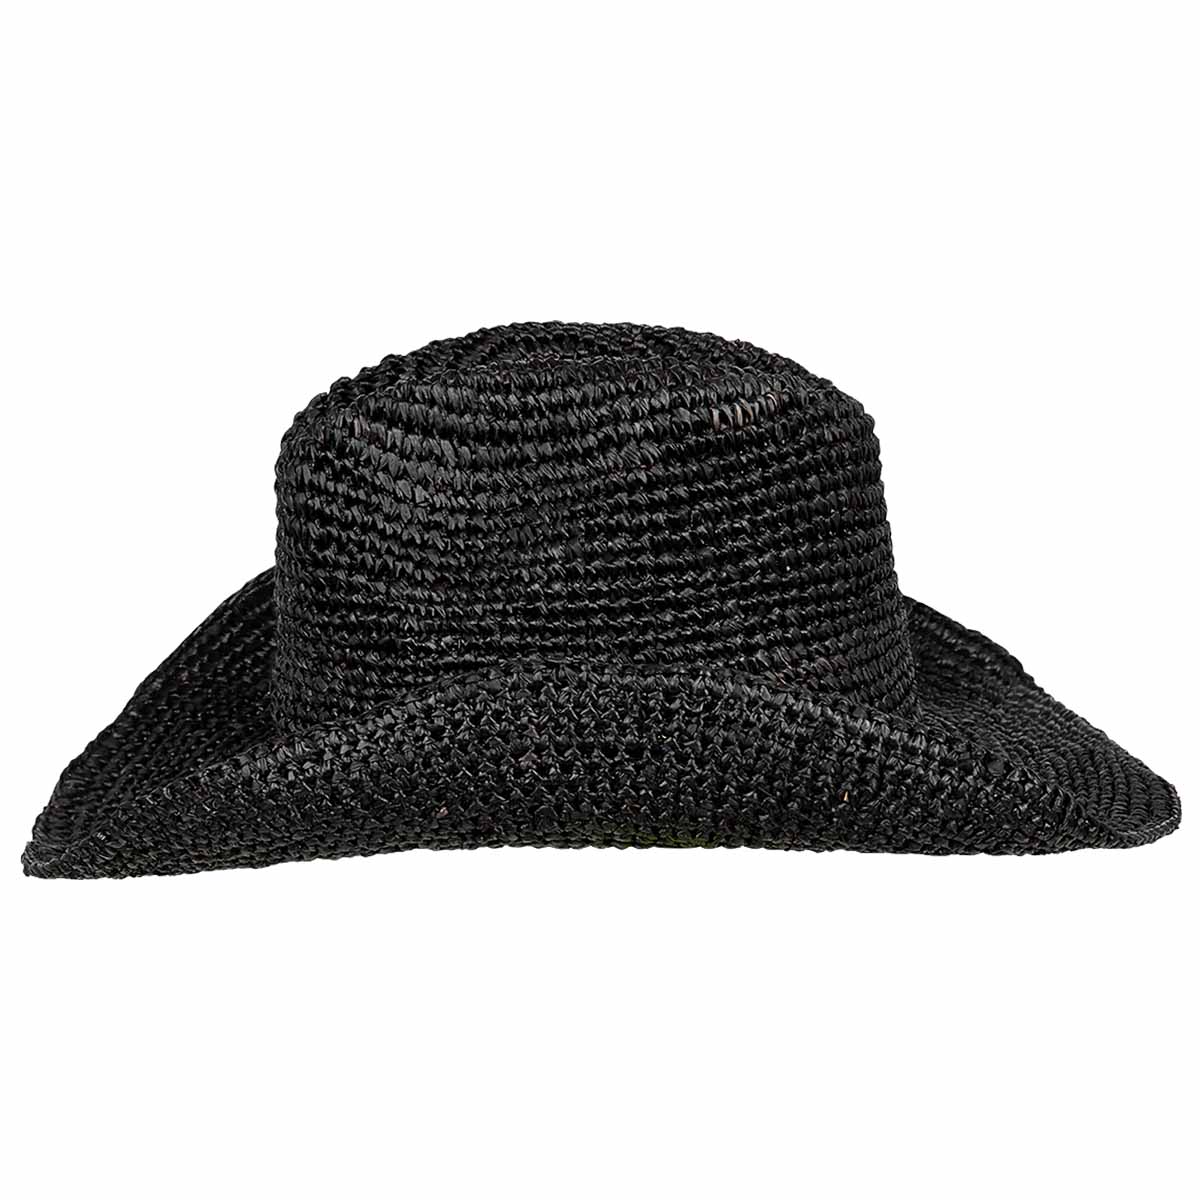 Kooringal - Reta Raffia Cowboy Hat in Black - Side